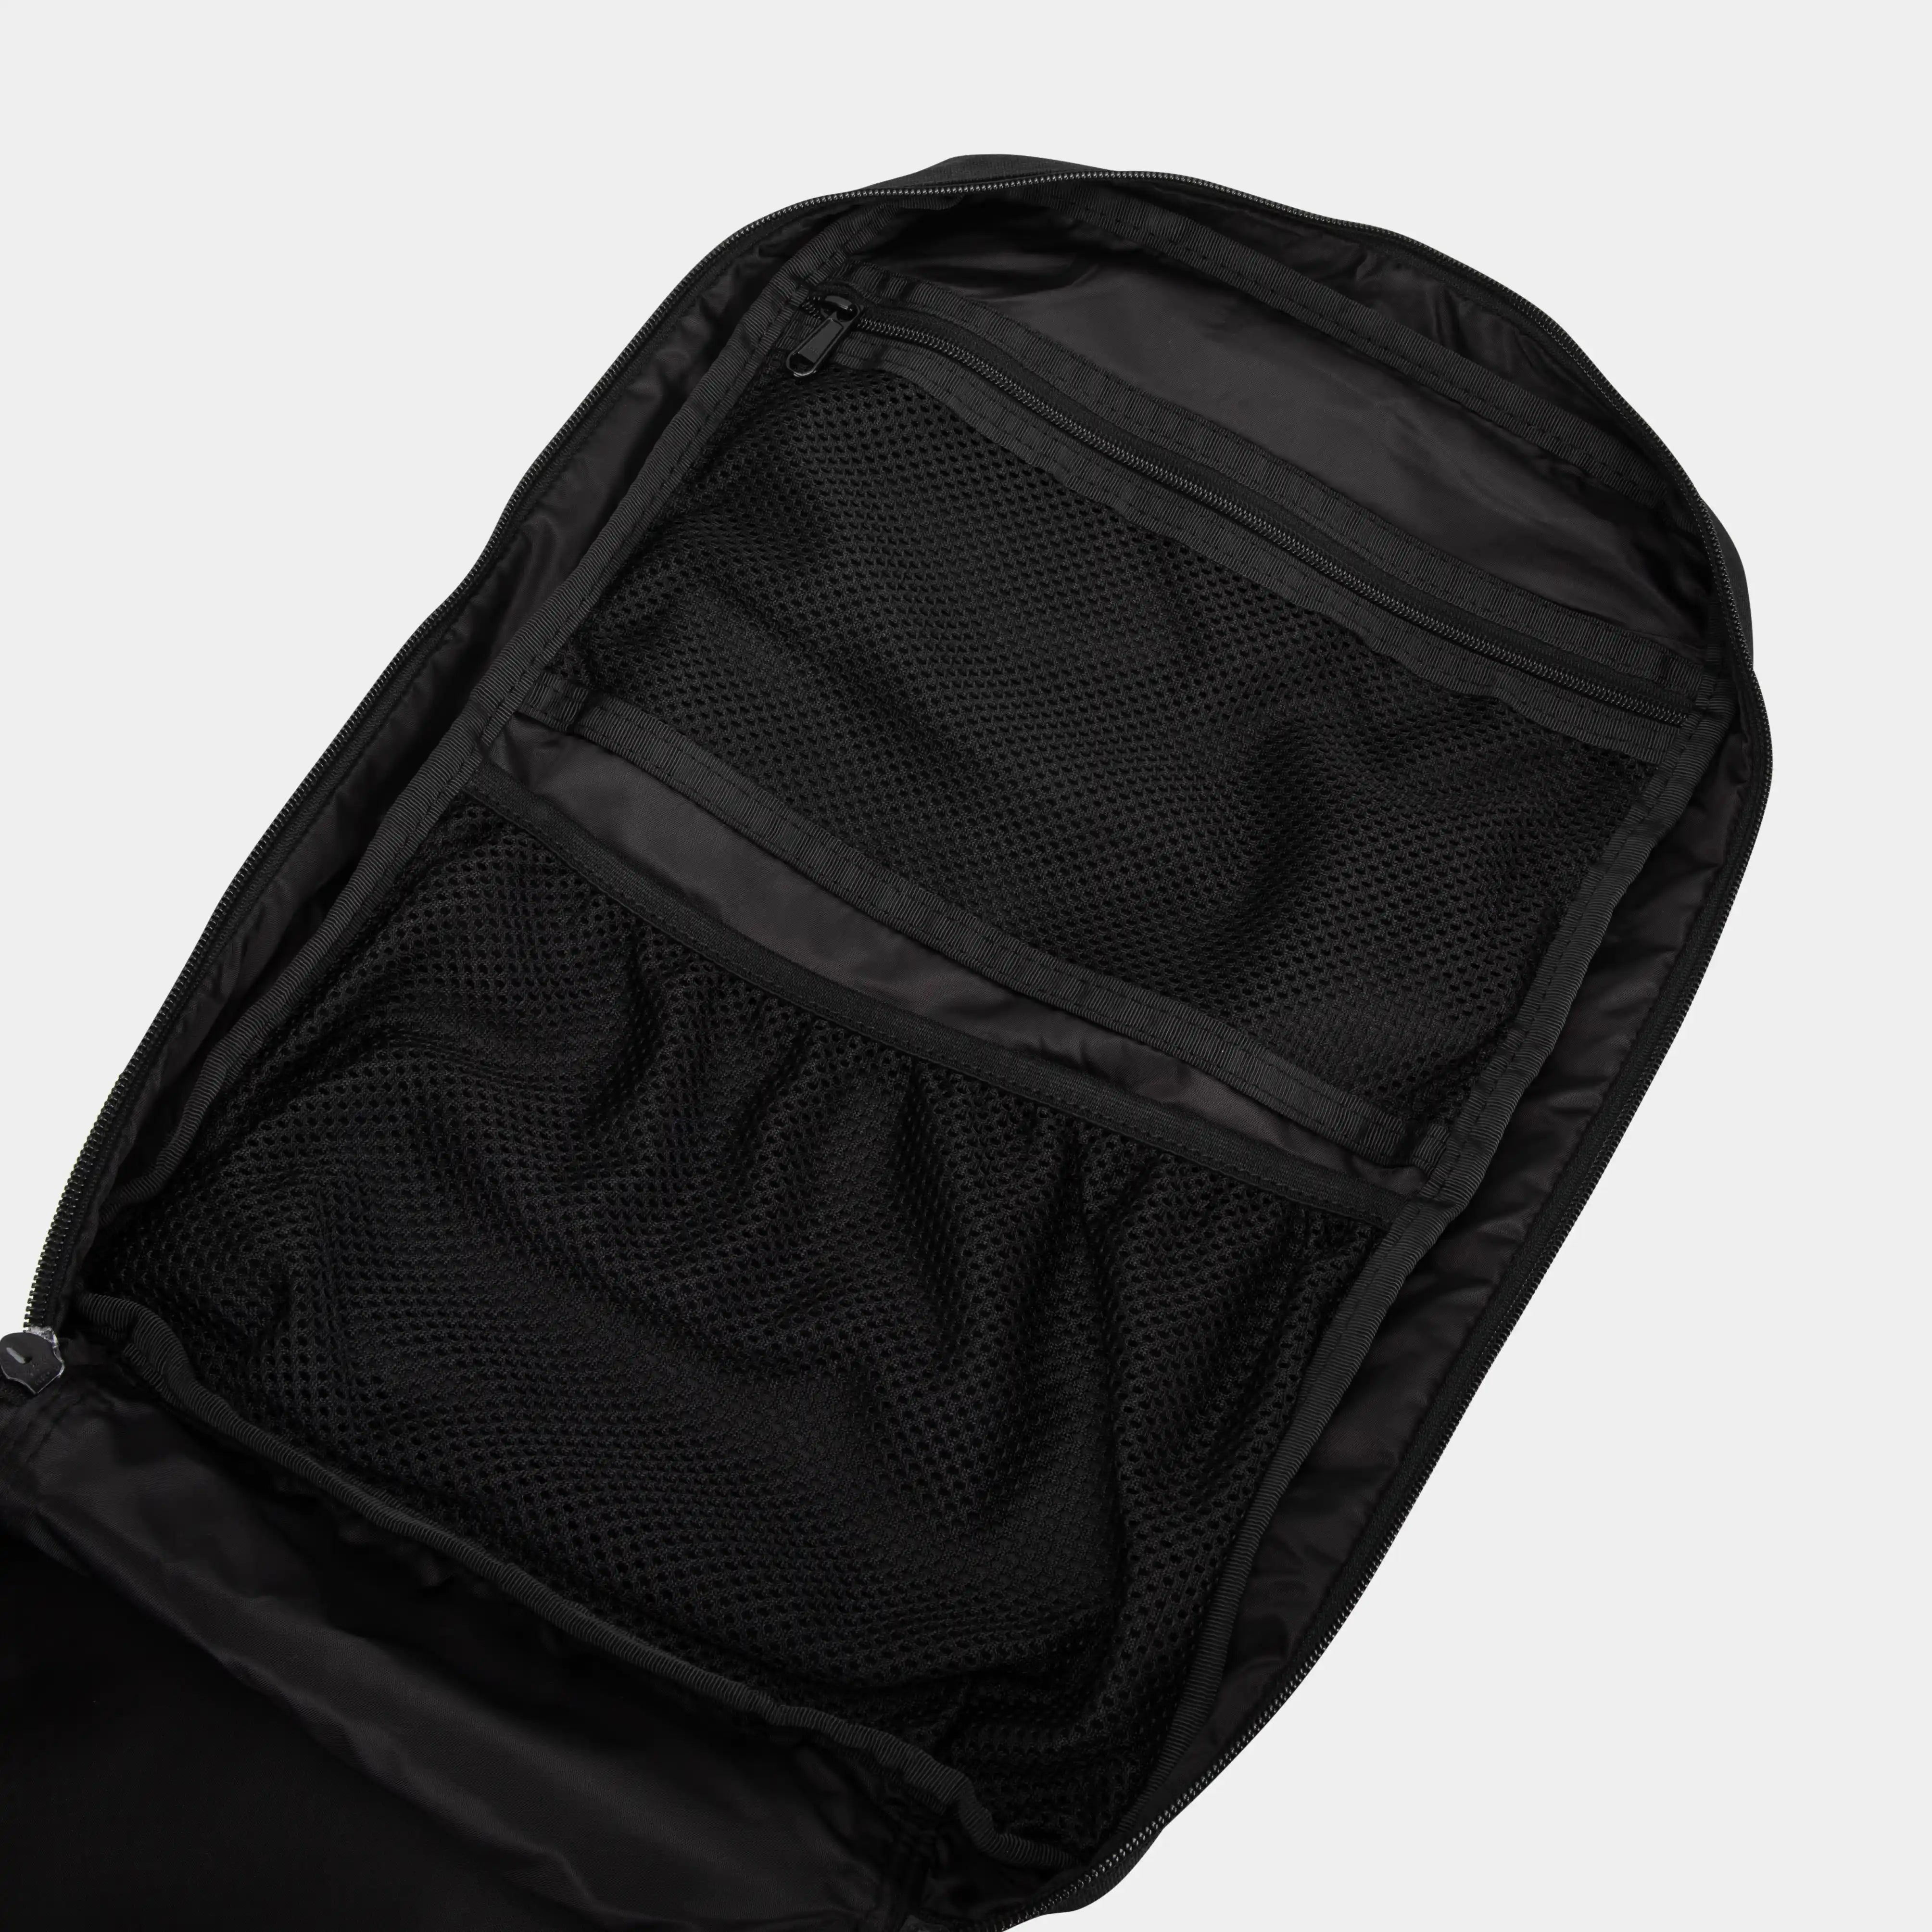 Built for Athletes Backpacks Large Black & Yellow Gym Backpack (35L)